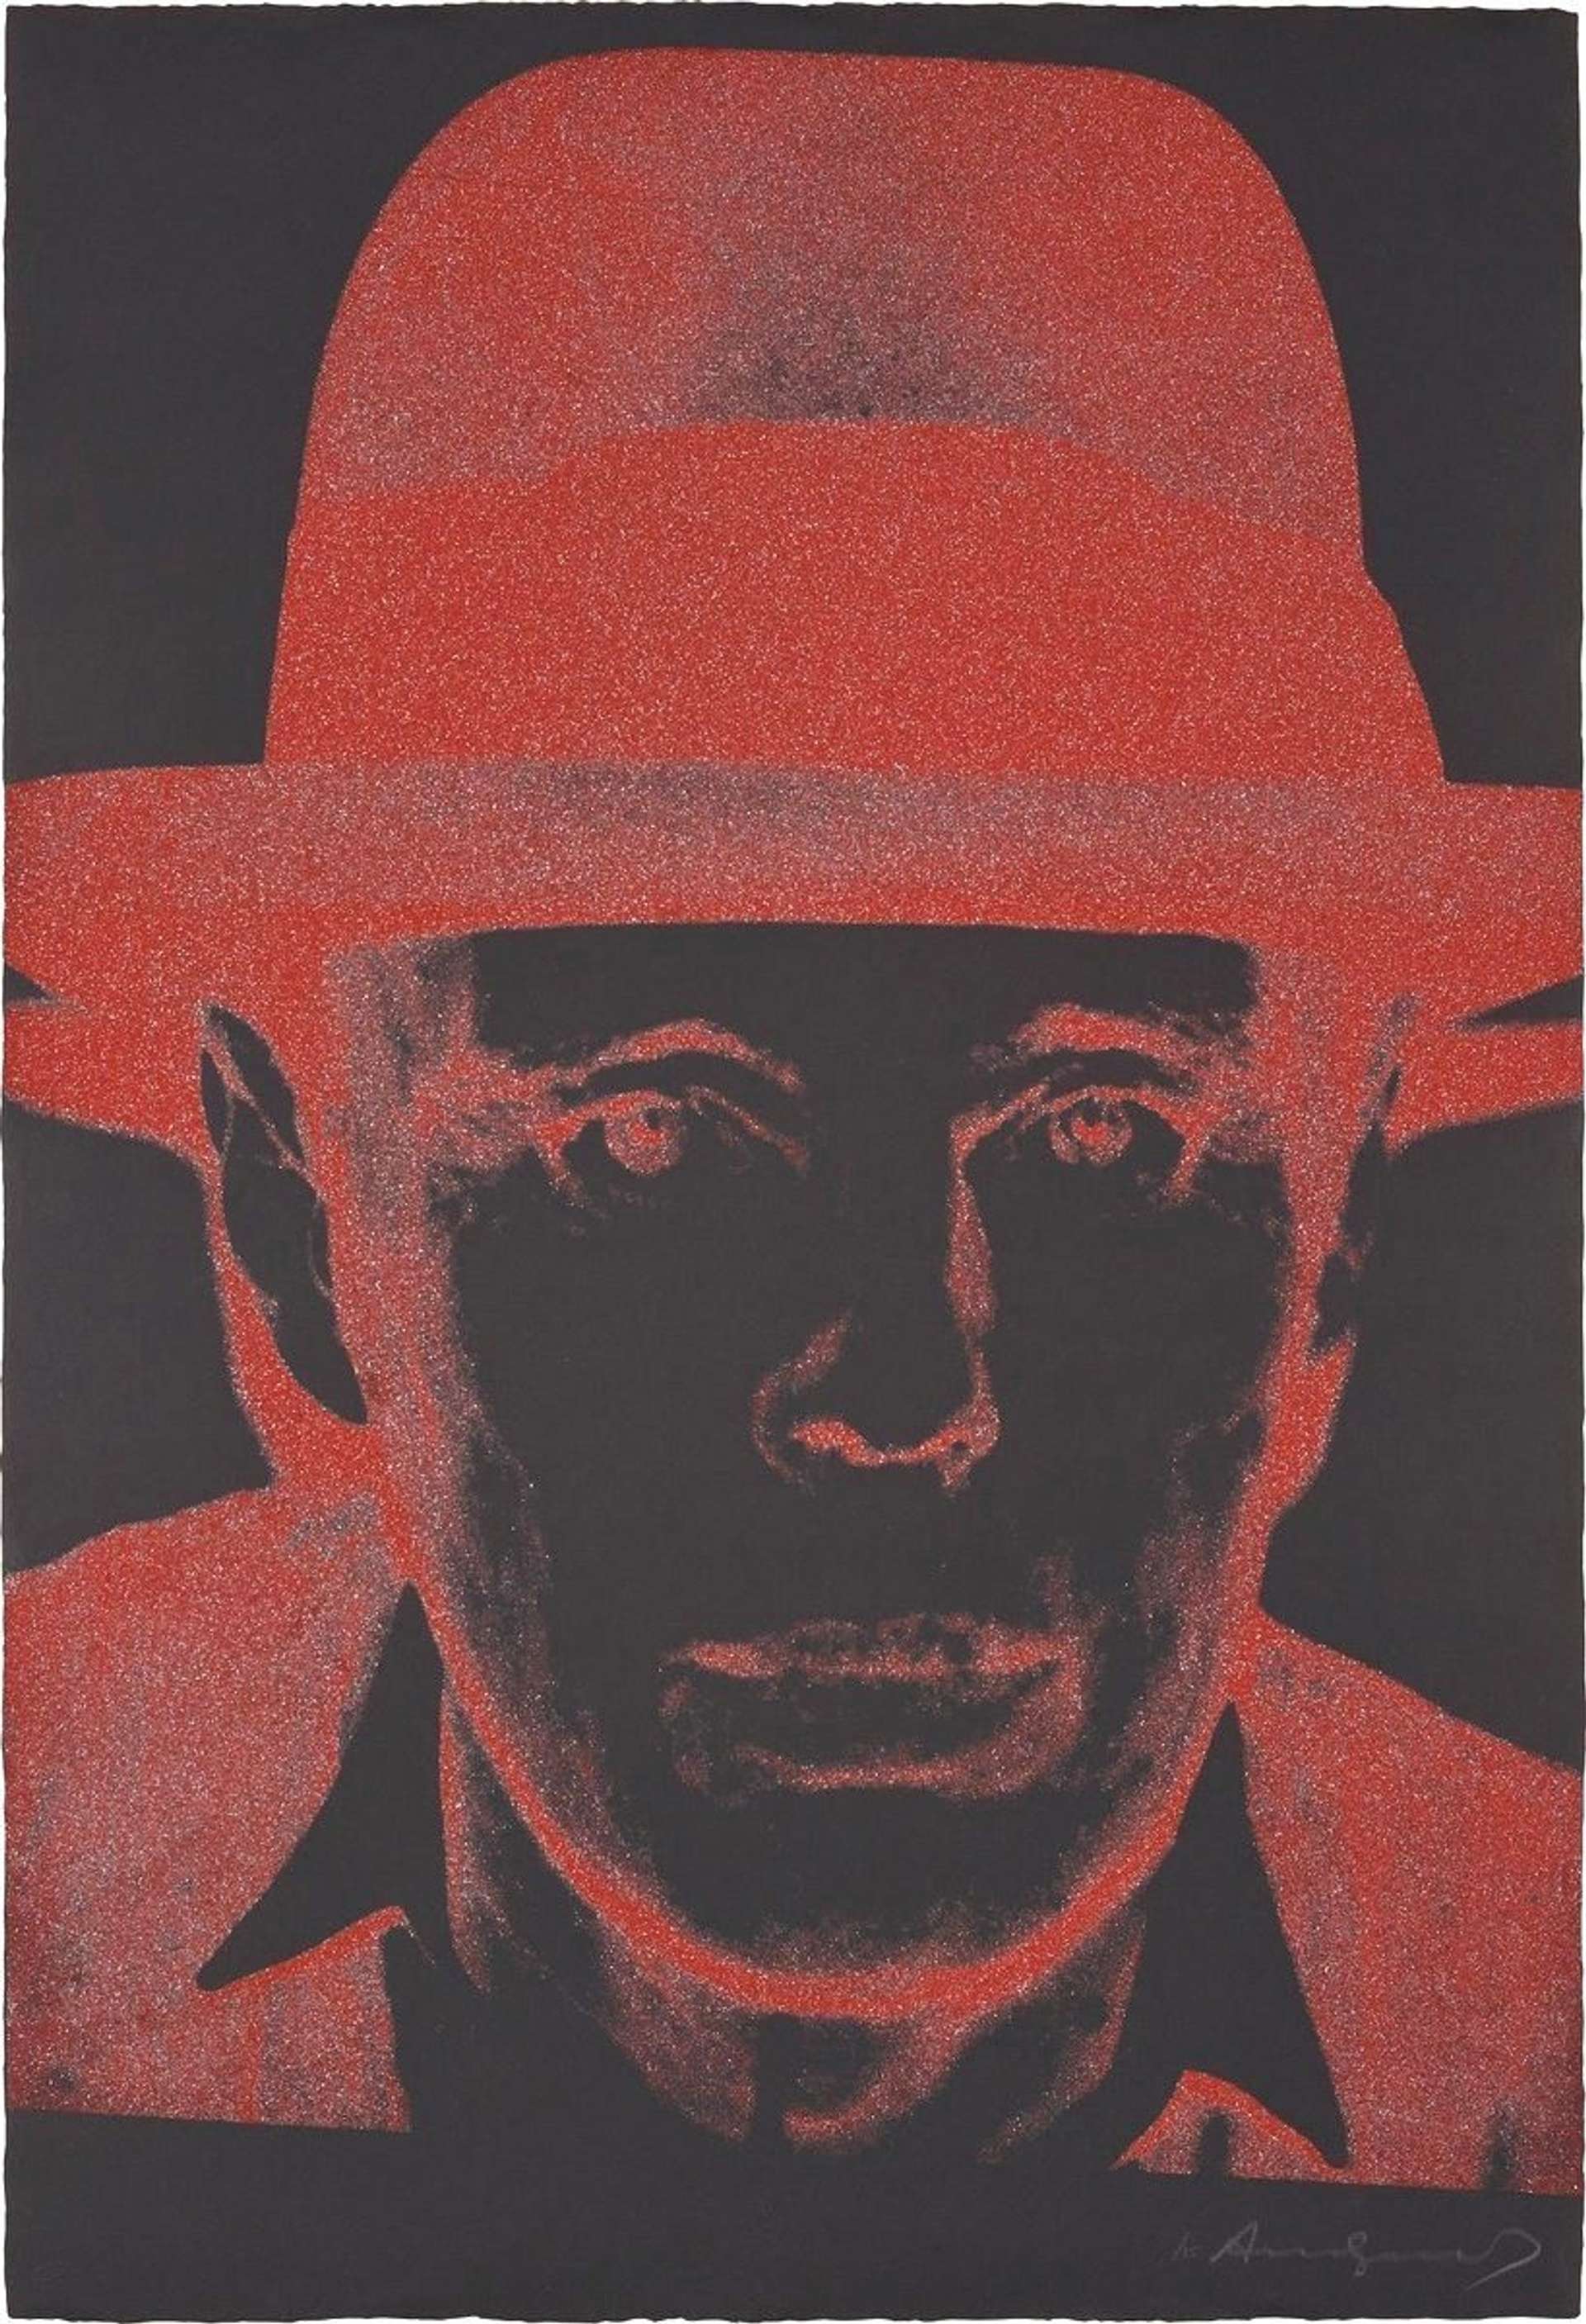 Joseph Beuys (F. & S. II.247) by Andy Warhol - MyArtBroker